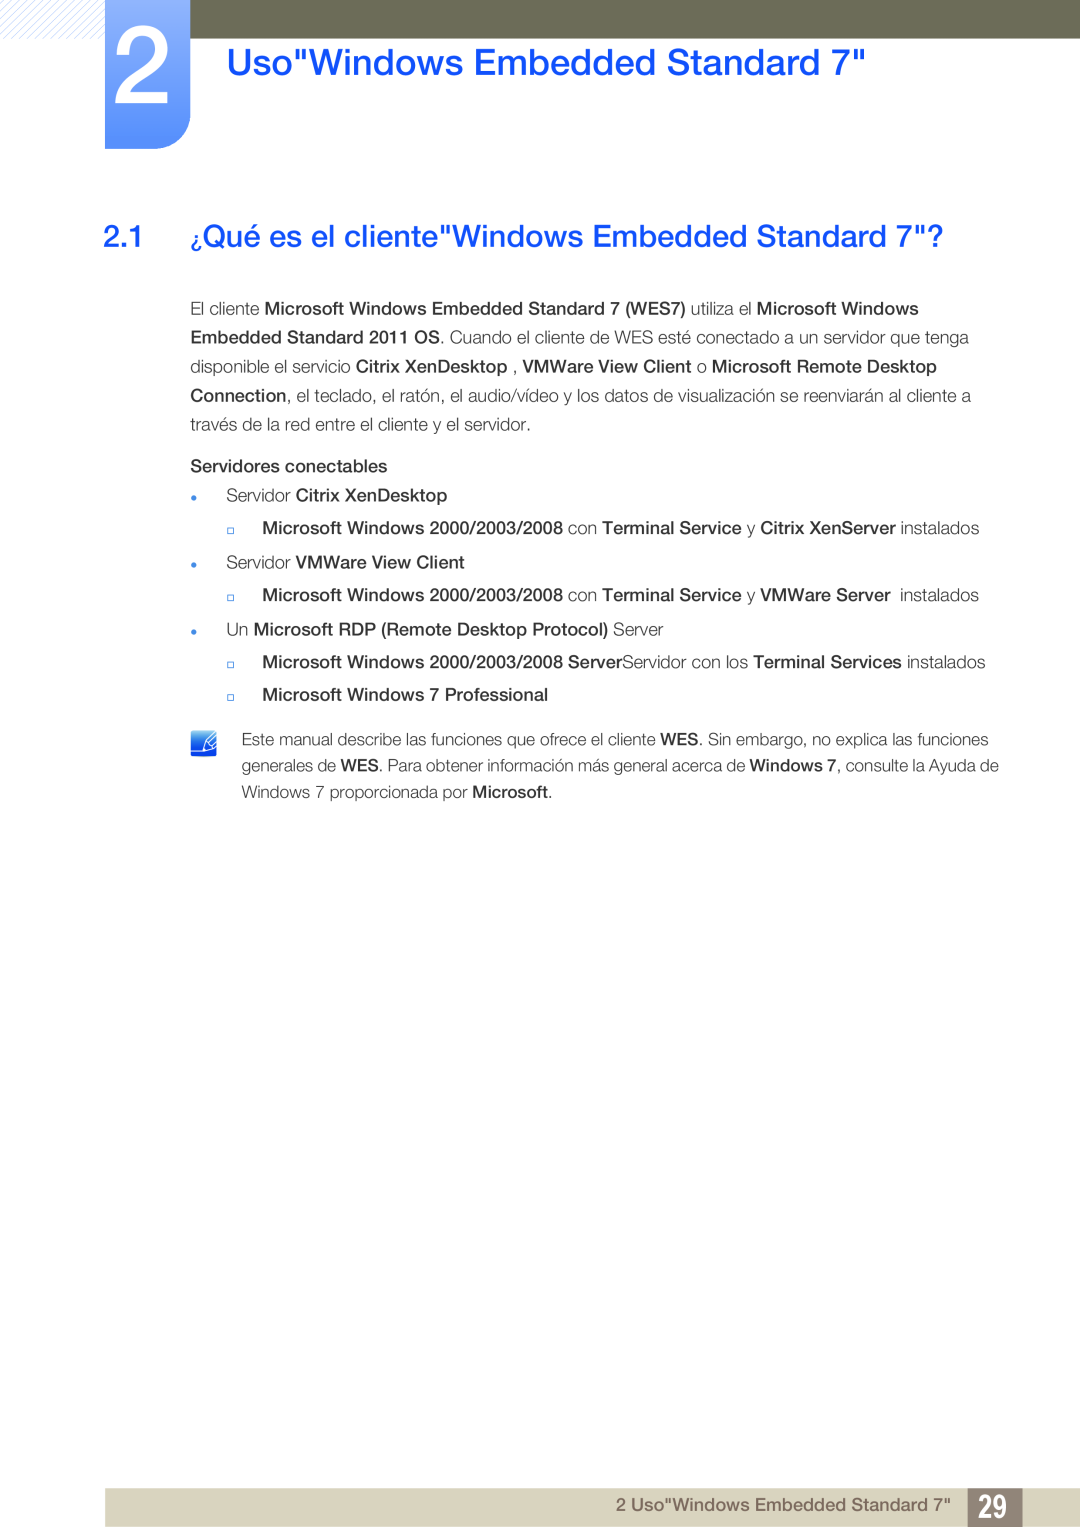 Samsung LF22TSWTBDN/EN, LF24TSWTBDN/EN UsoWindows Embedded Standard, 2.1 ¿Qué es el clienteWindows Embedded Standard 7? 